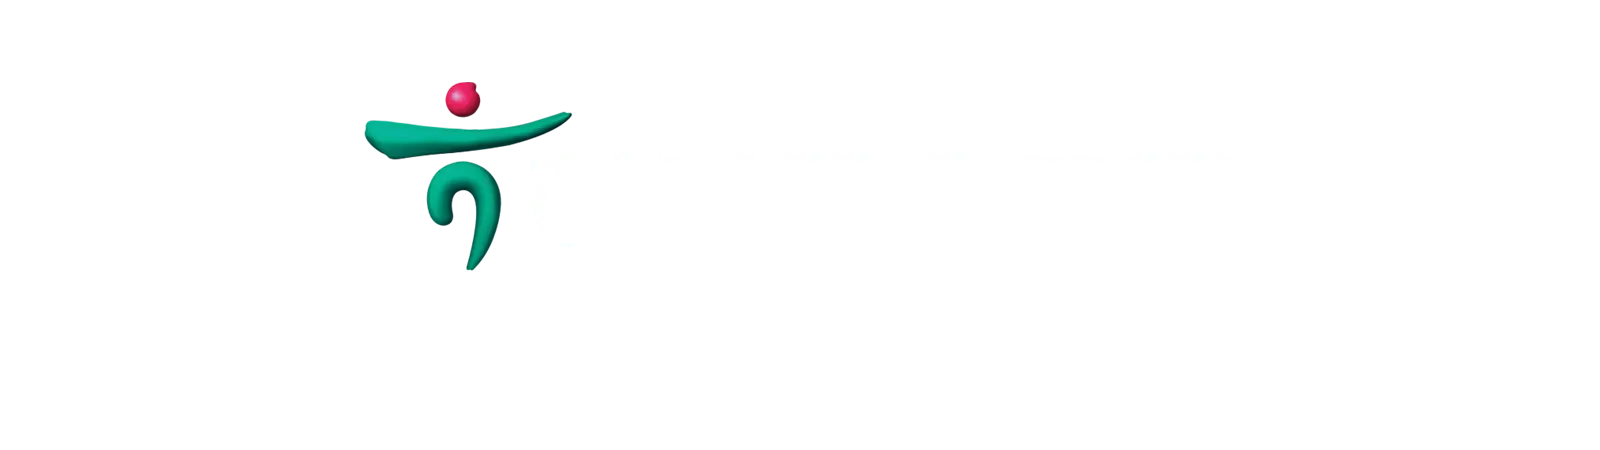 Hana Financial Group GI